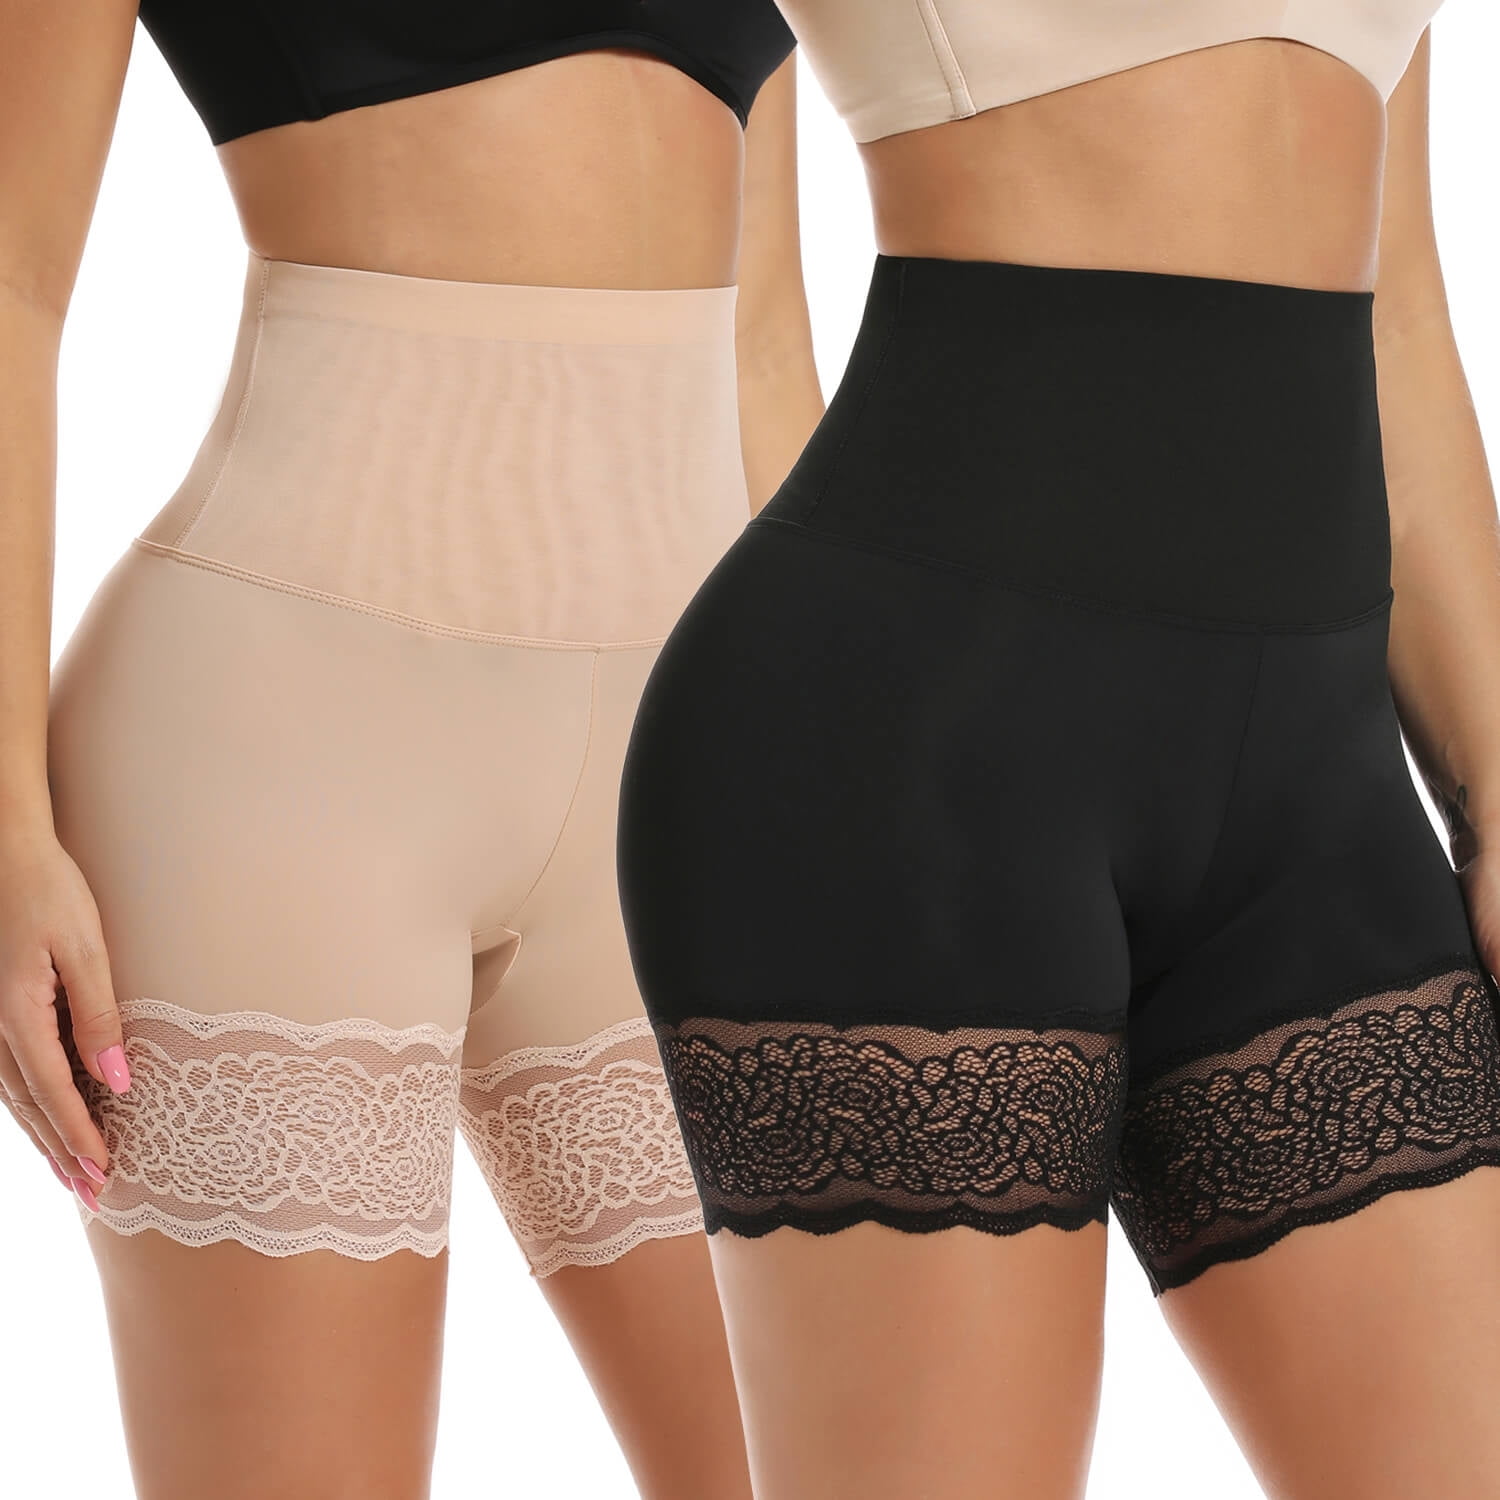 Joyshaper Slip Shorts for Under Dresses Anti Chafing Thigh Bands Underwear Women Girls Lace Stretch Safety Pants Leggings 